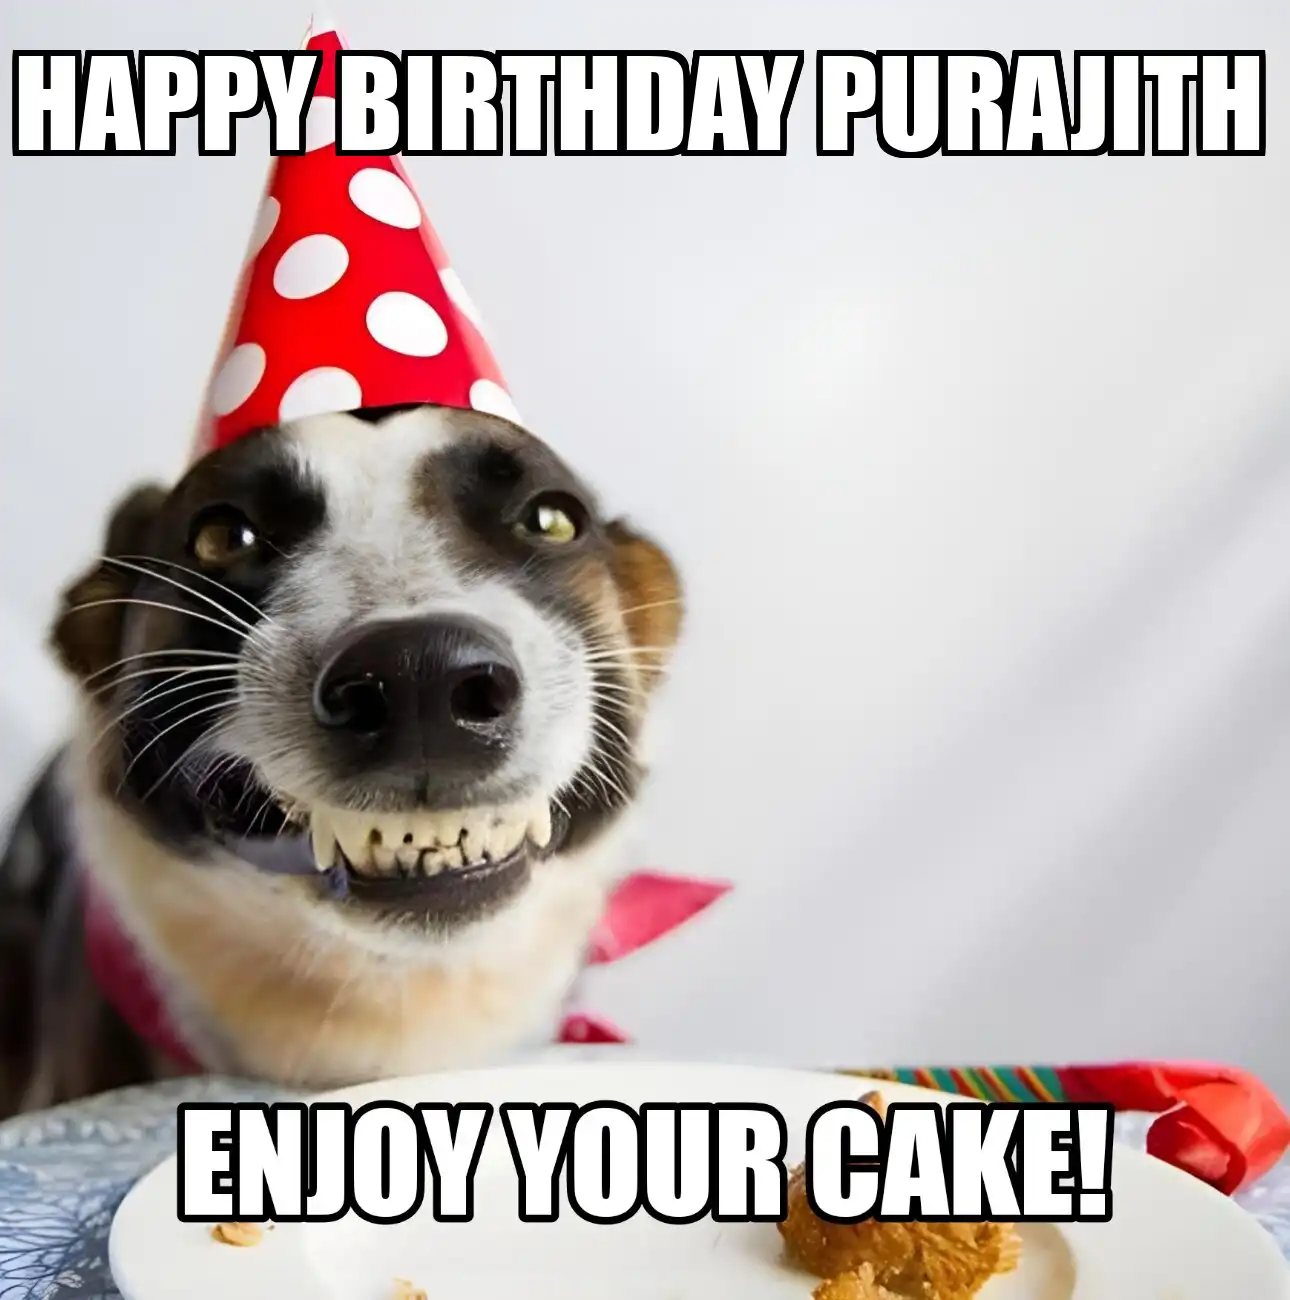 Happy Birthday Purajith Enjoy Your Cake Dog Meme